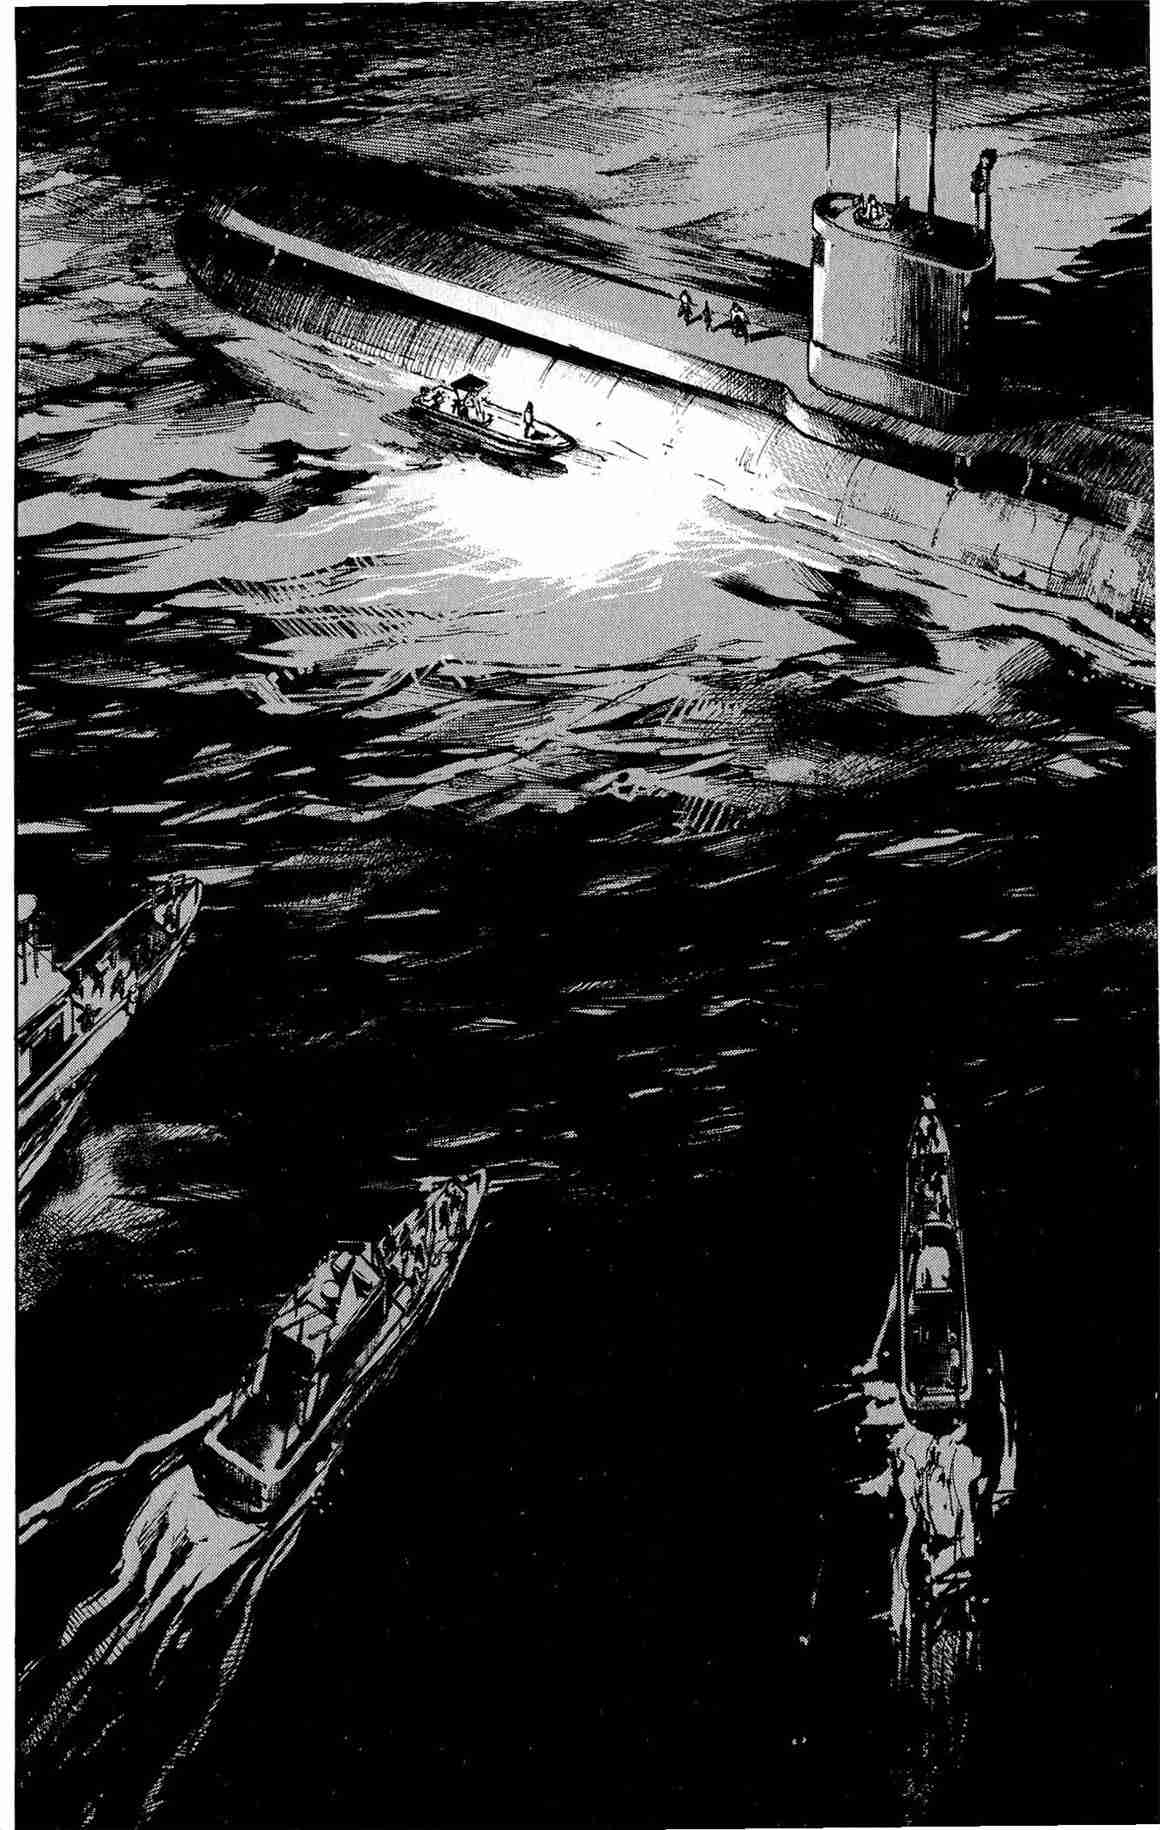 Jiraishin Diablo Vol. 2 Ch. 10 The Lost Island / Part 10 "Destruction"